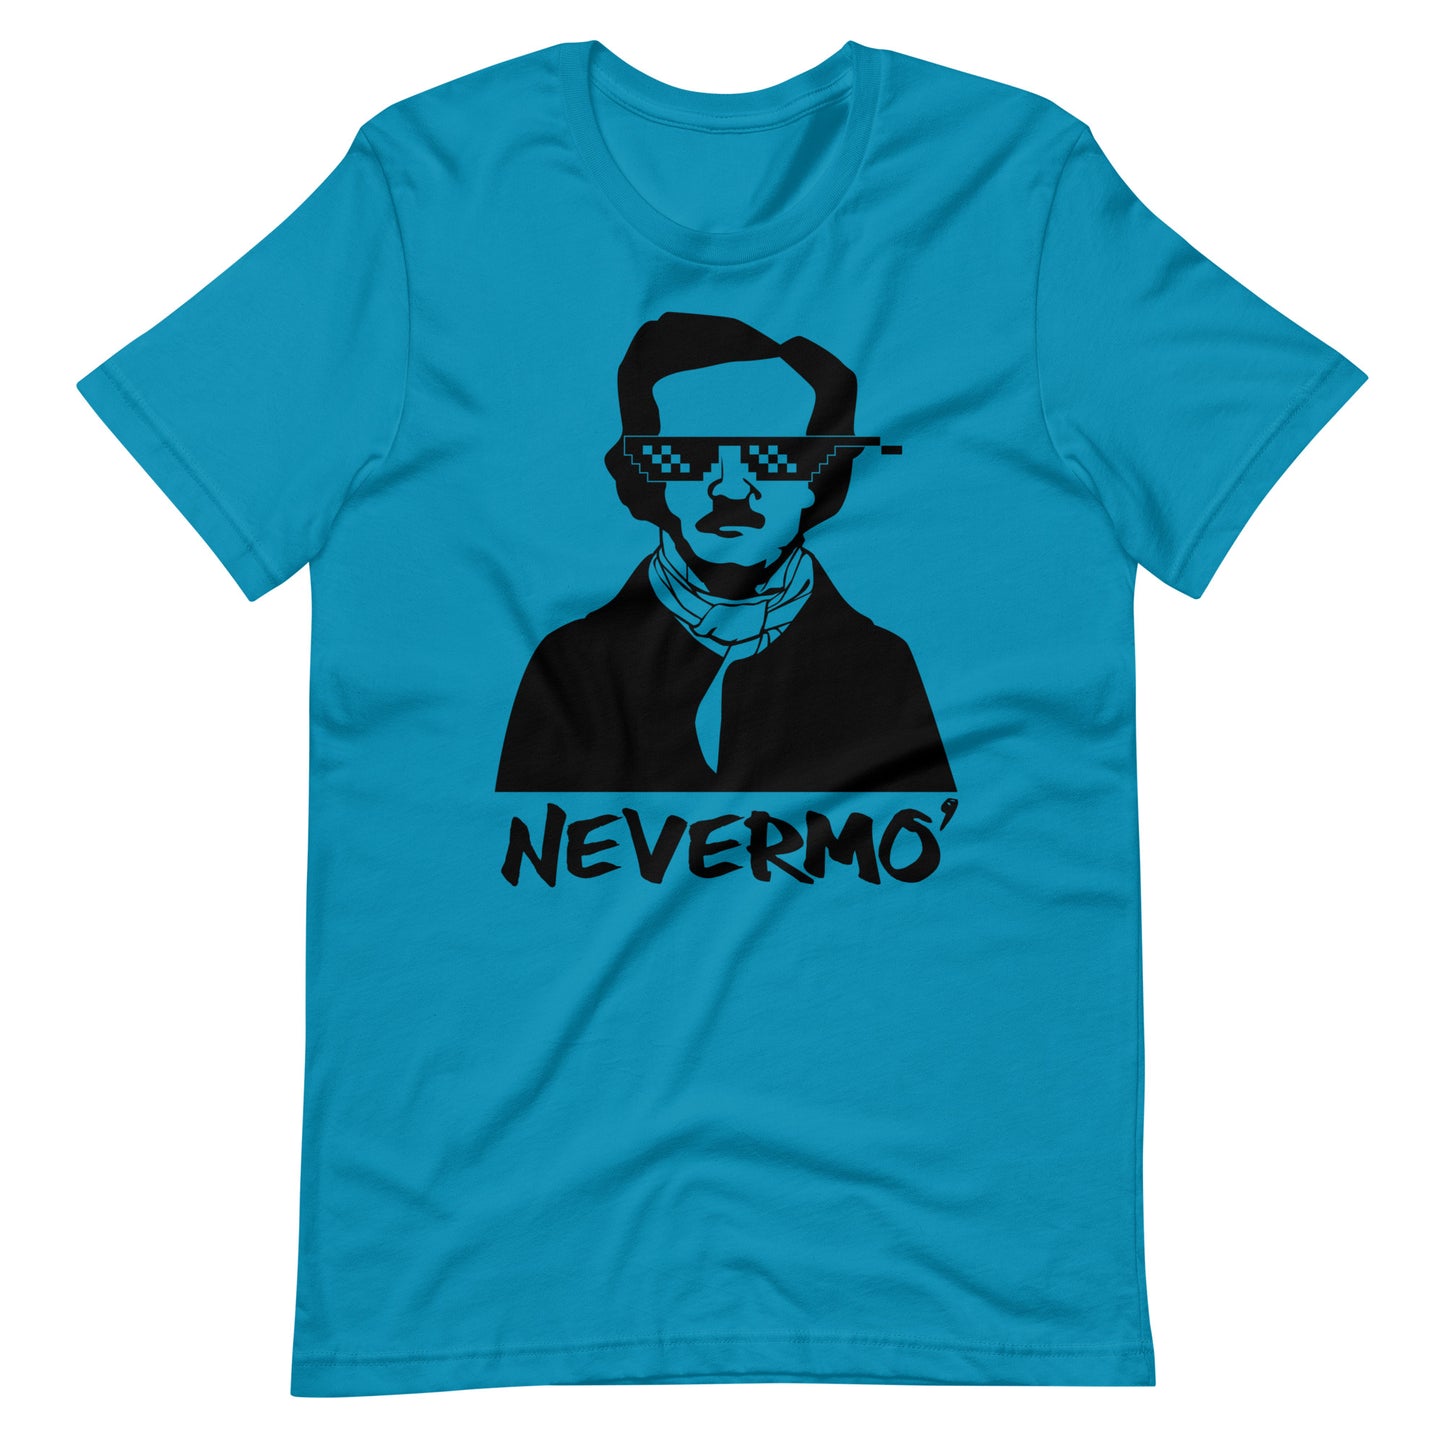 Men's Edgar Allan Poe "The Nevermo" T-Shirt - Aqua Front